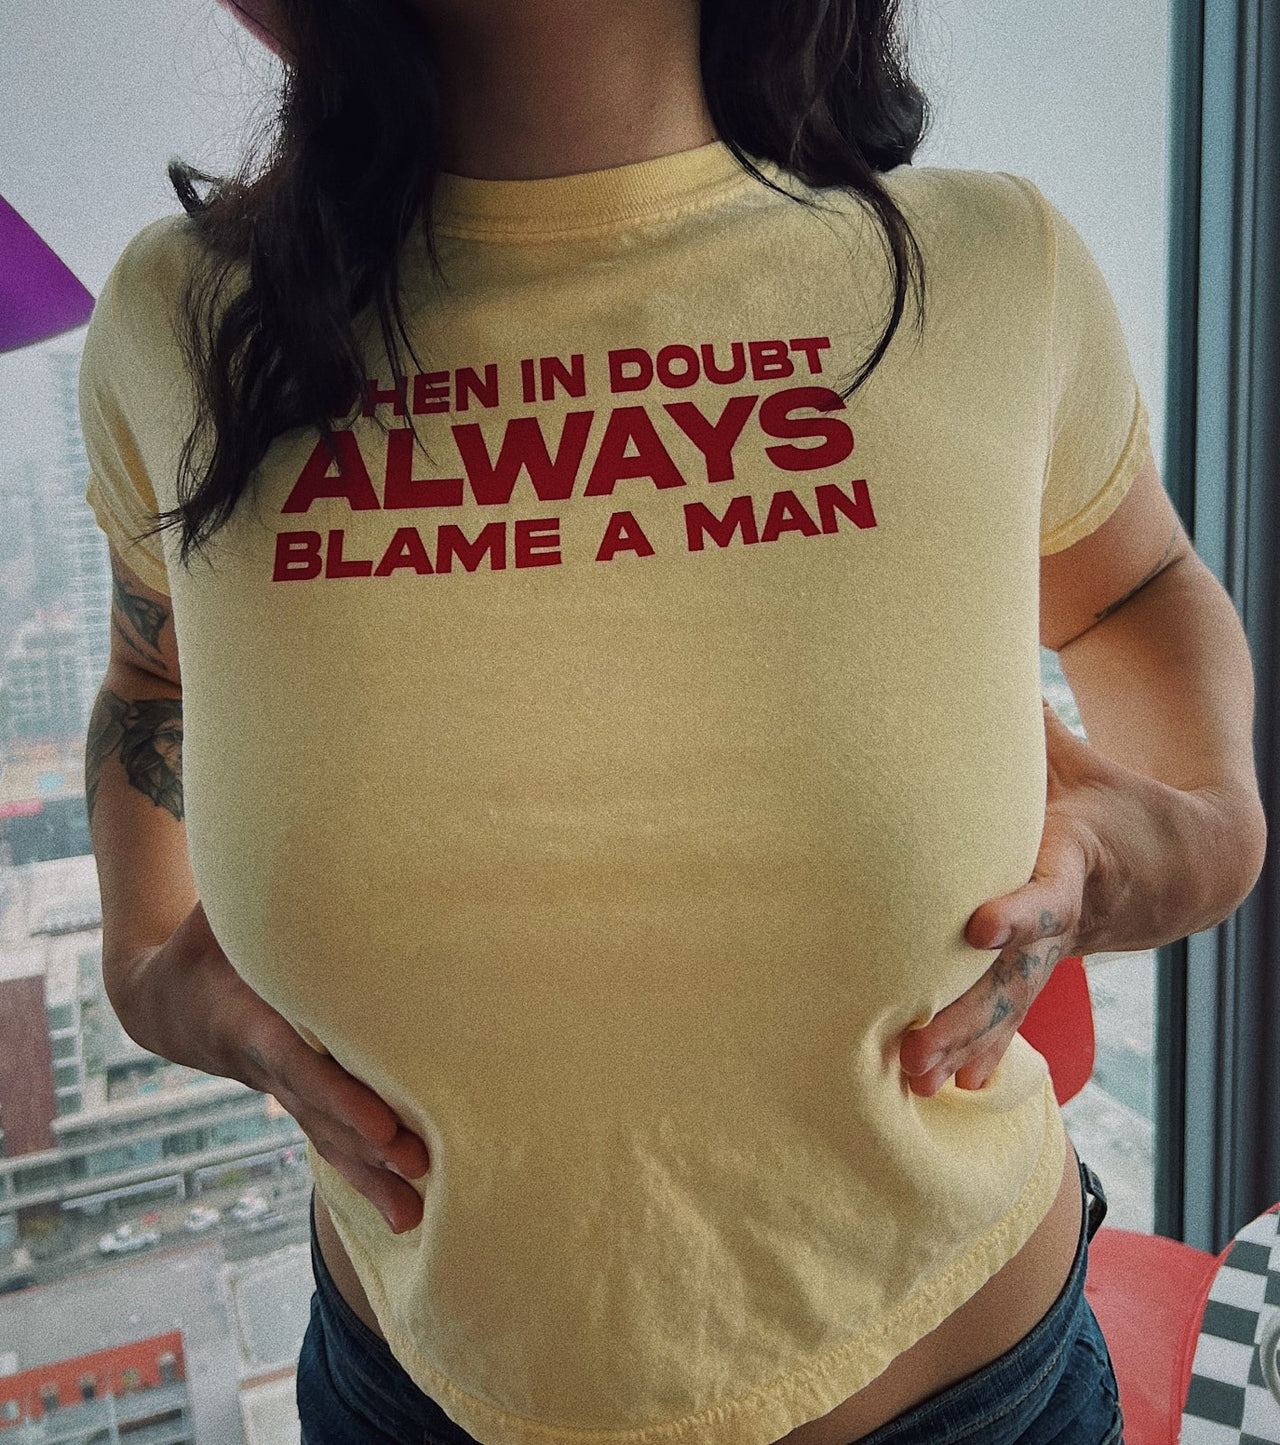 when in doubt always blame a MAN